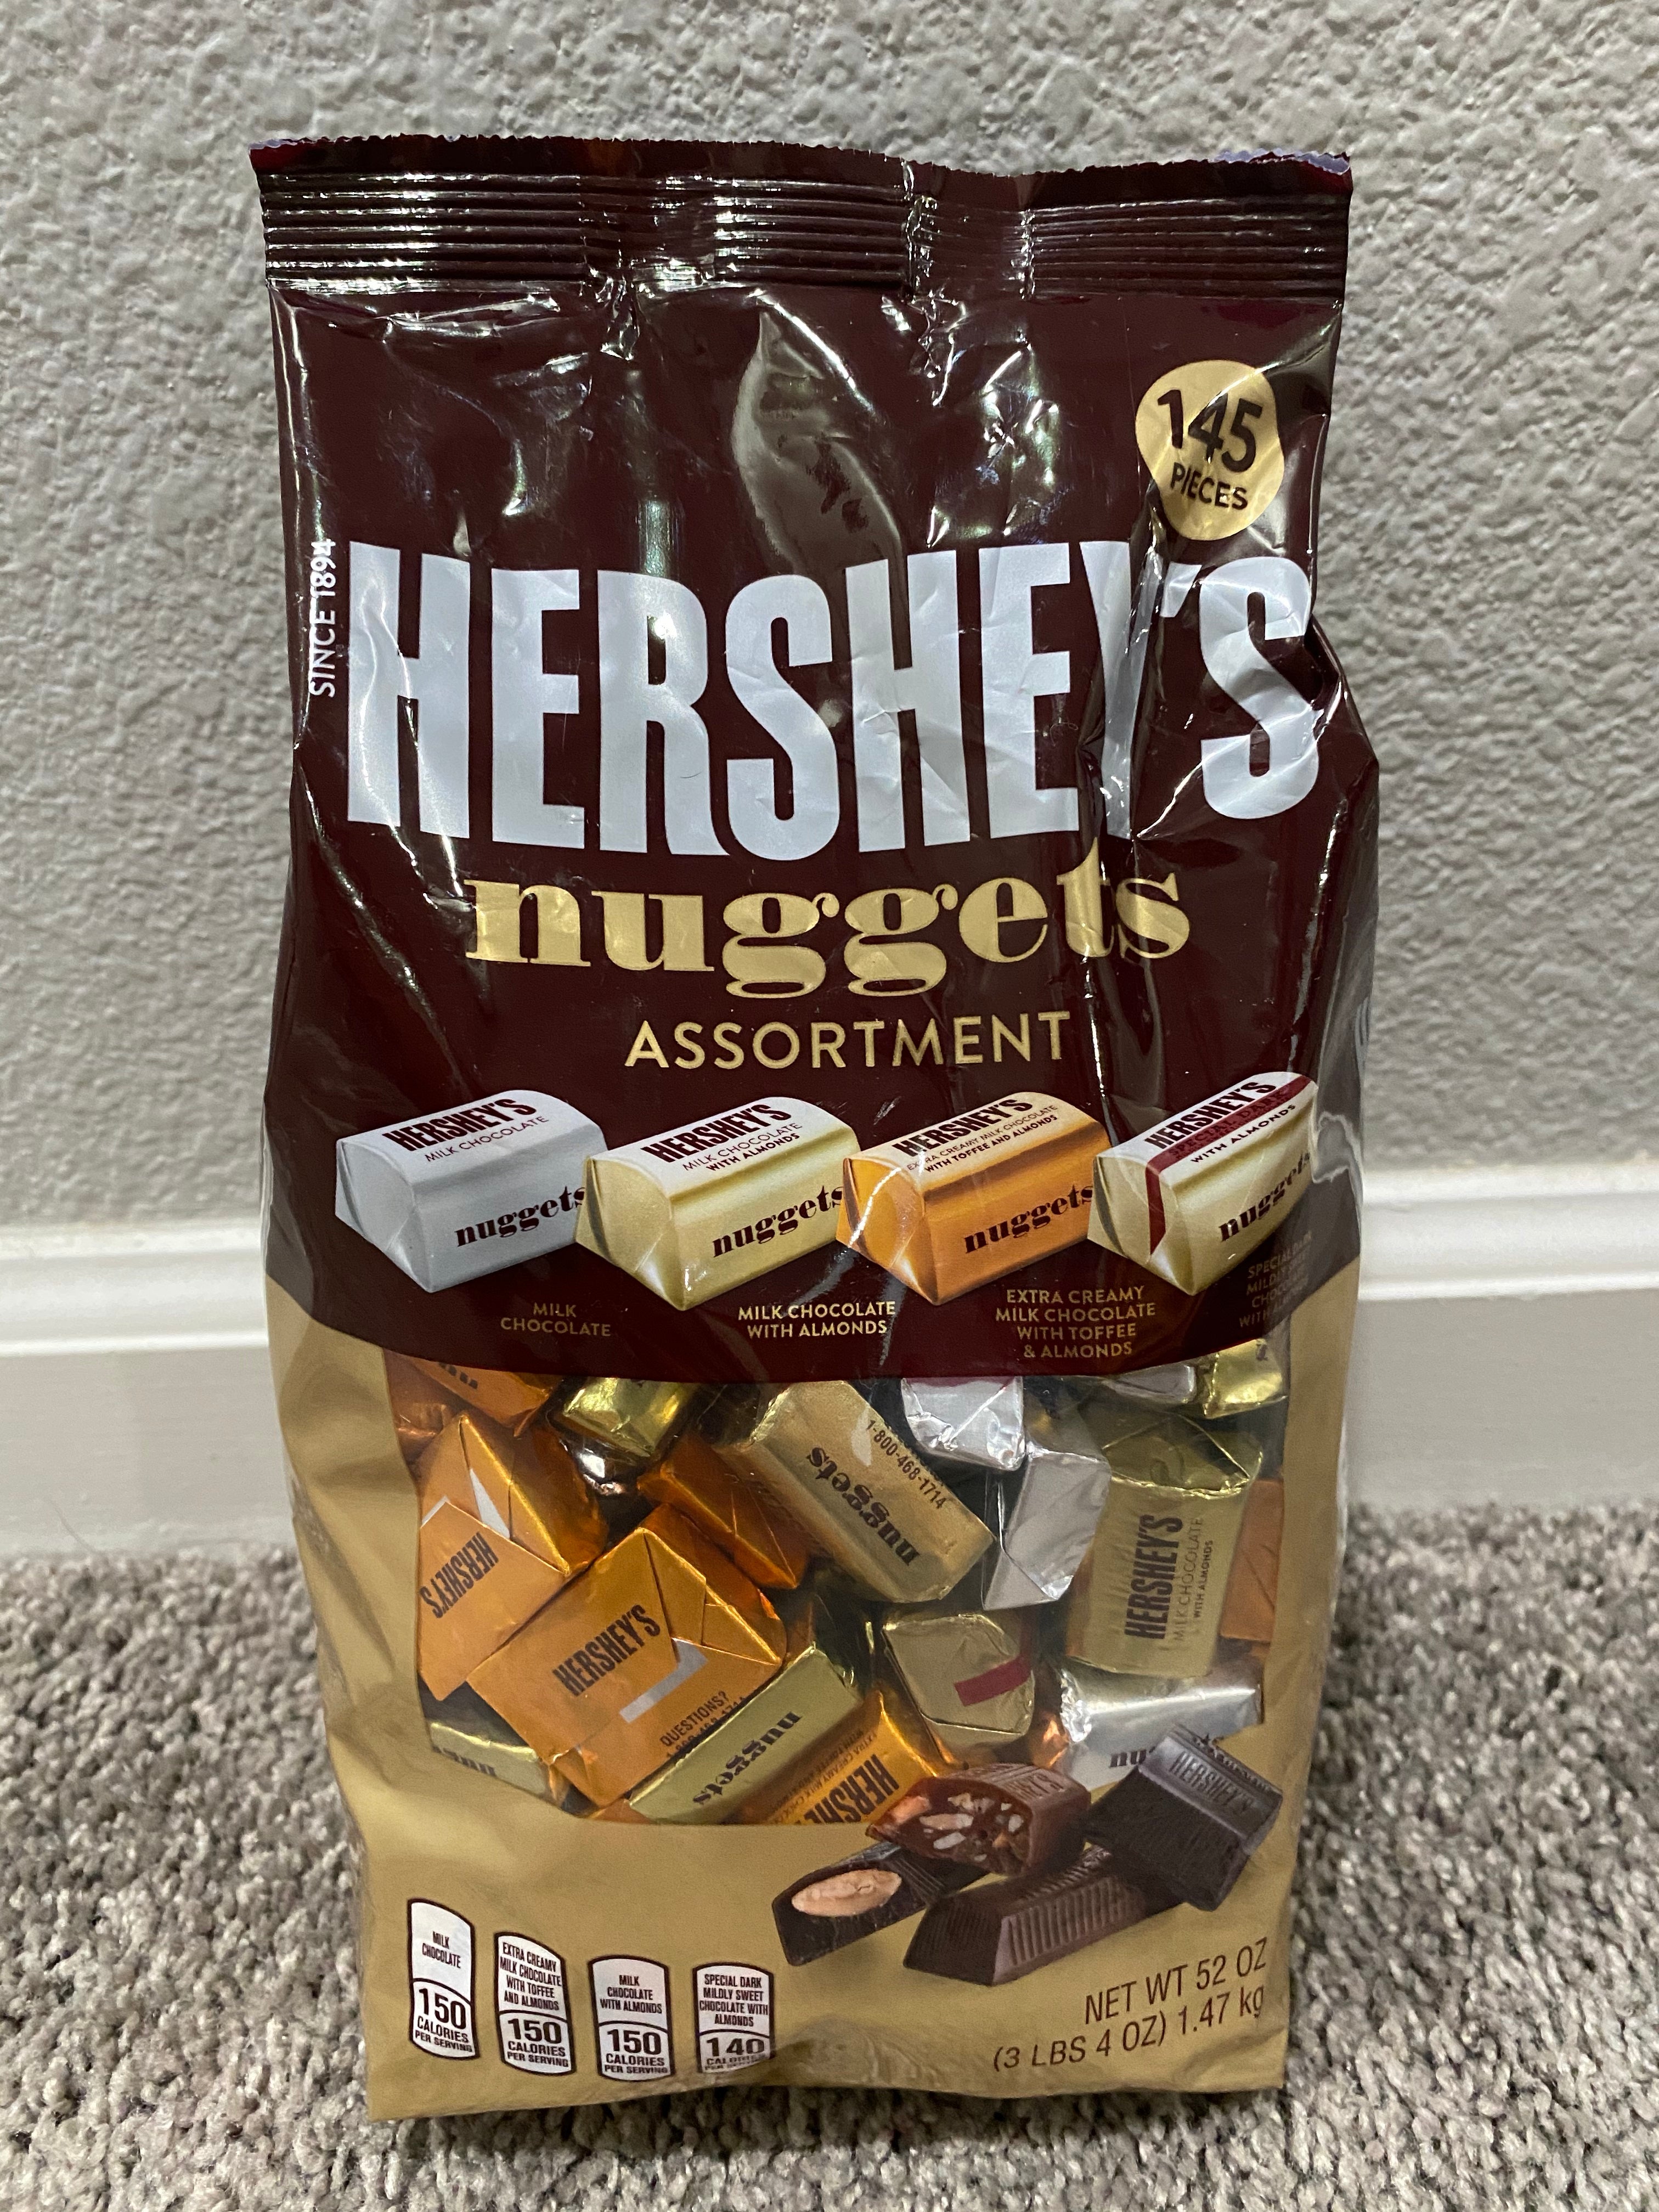 Hersheys Nuggets, Assortment - 52 oz